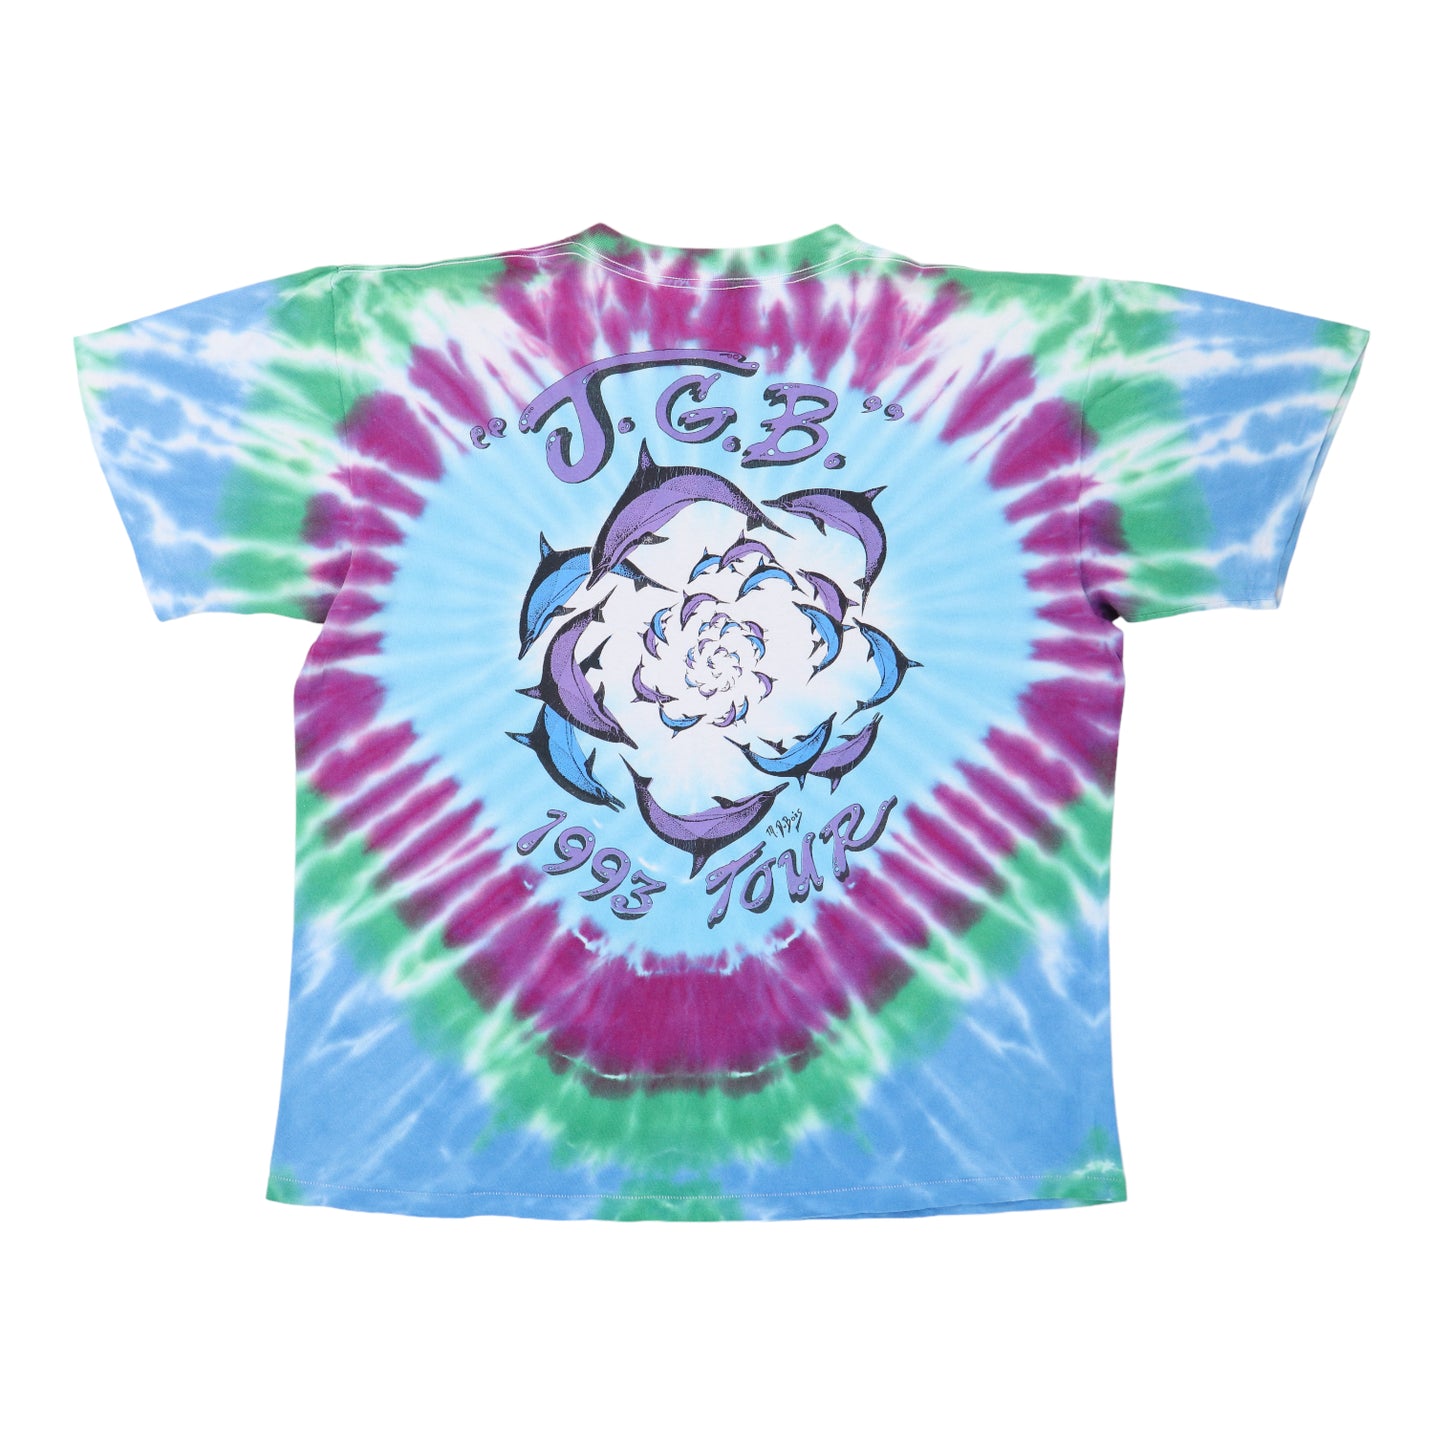 1993 Jerry Garcia Brand Tour Tie Dye Shirt